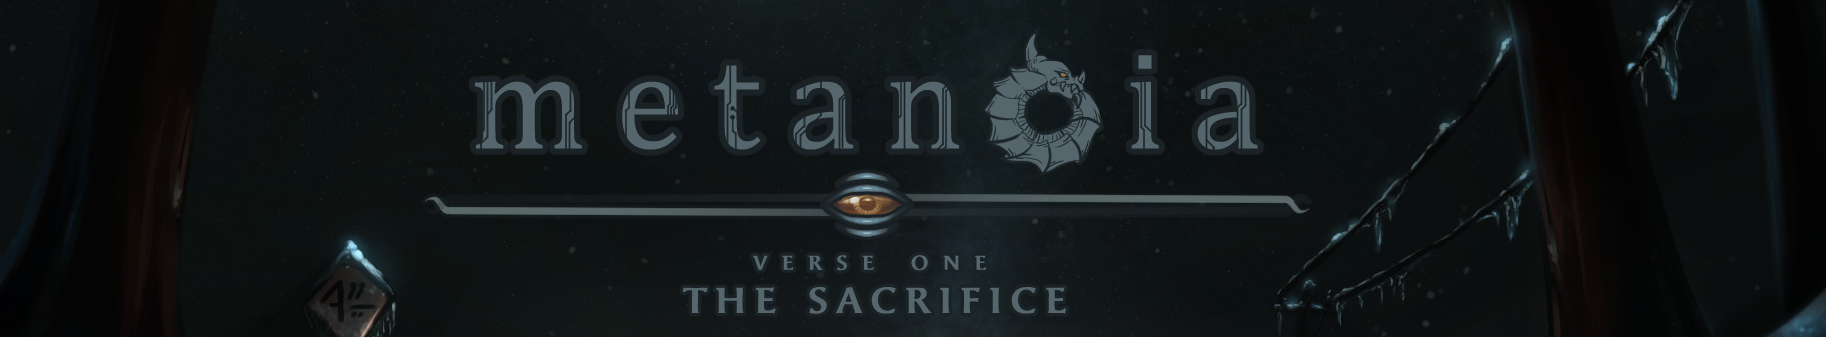 Metanoia: The Sacrifice